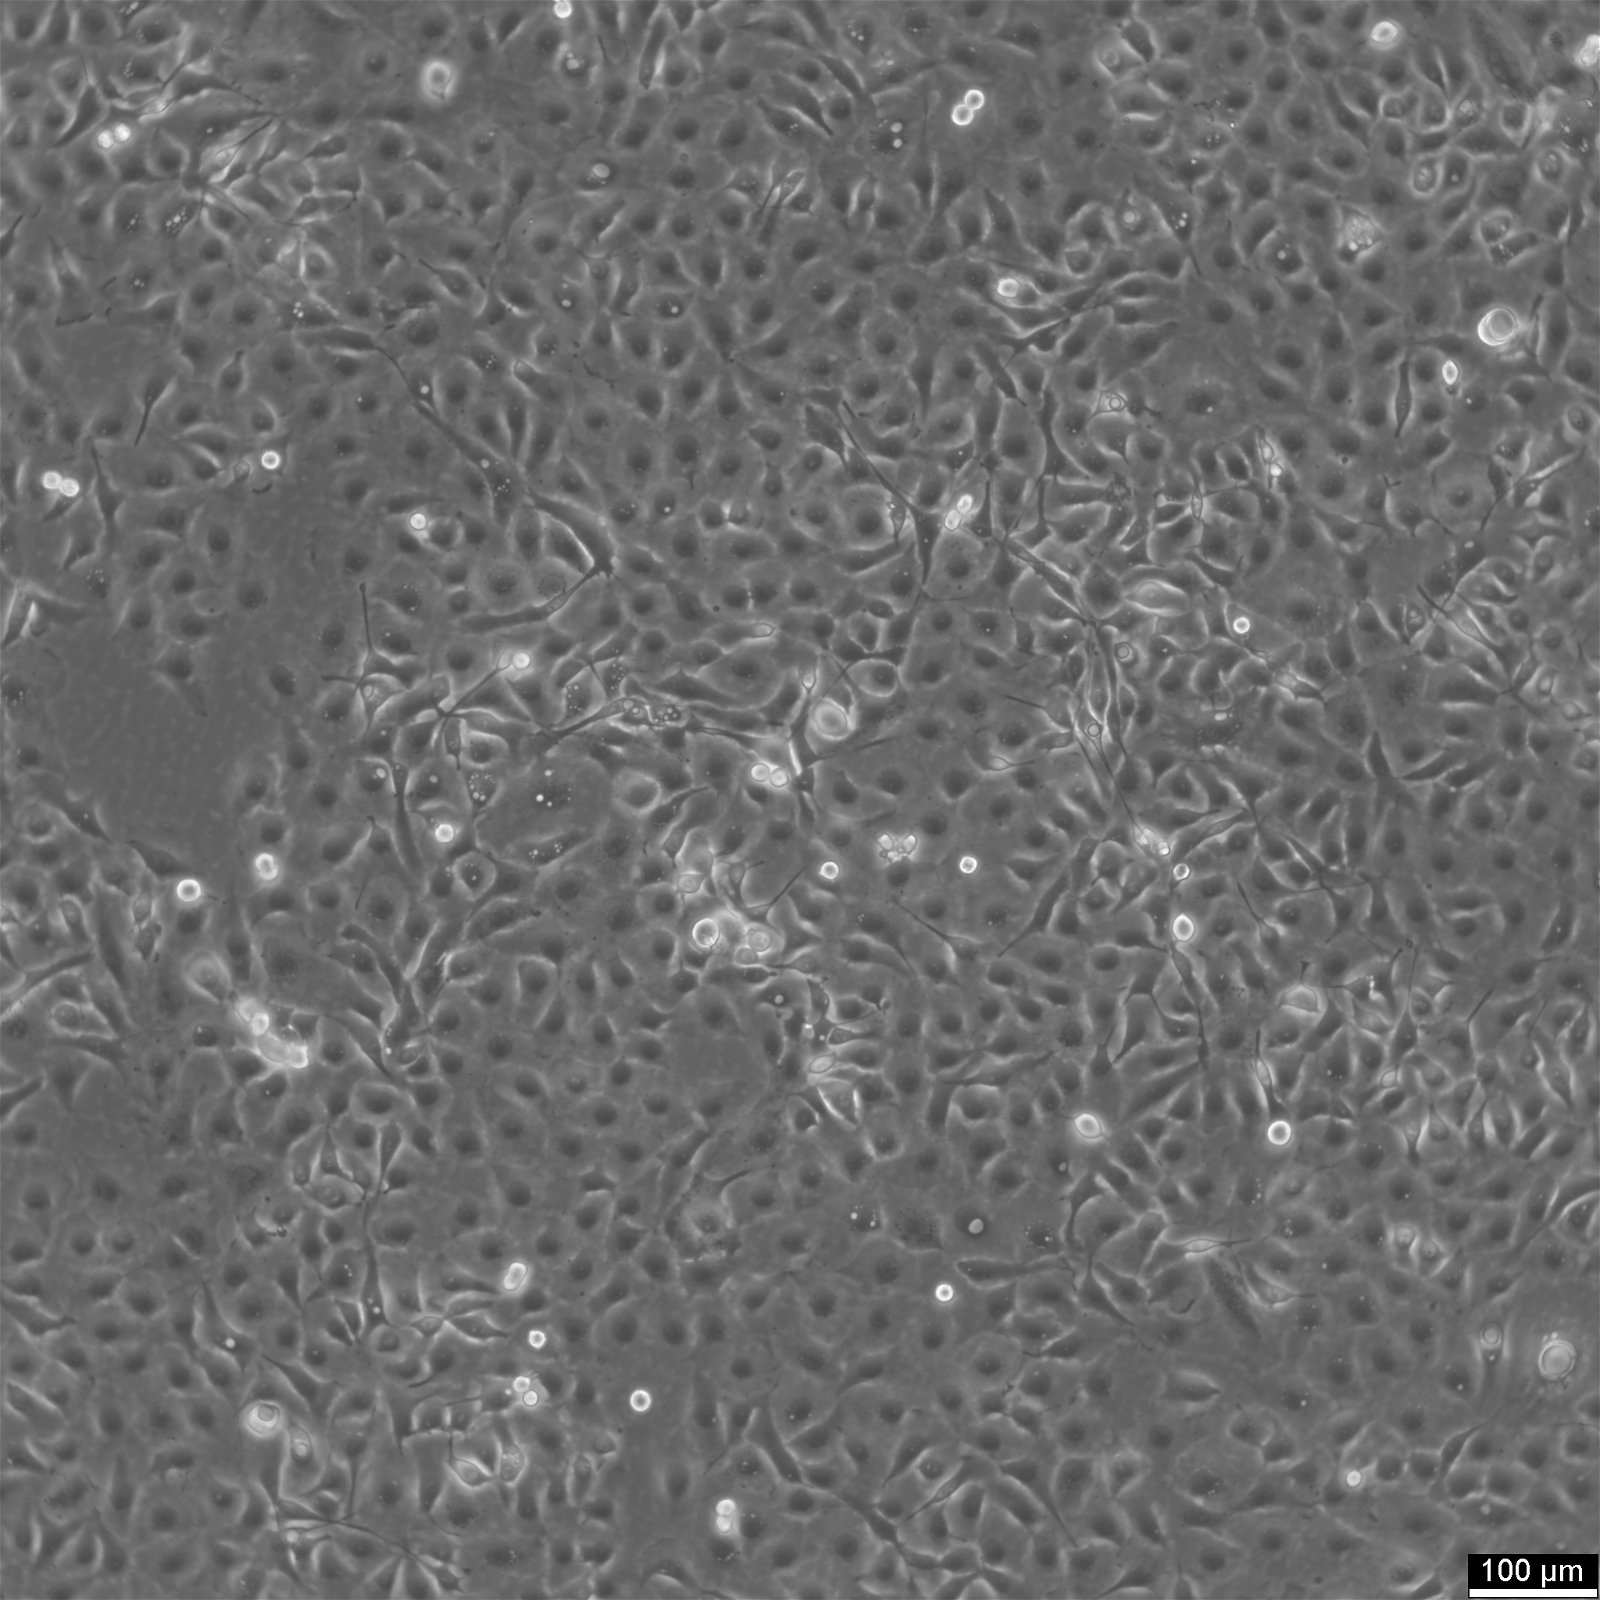 NCI-H1650 Cells